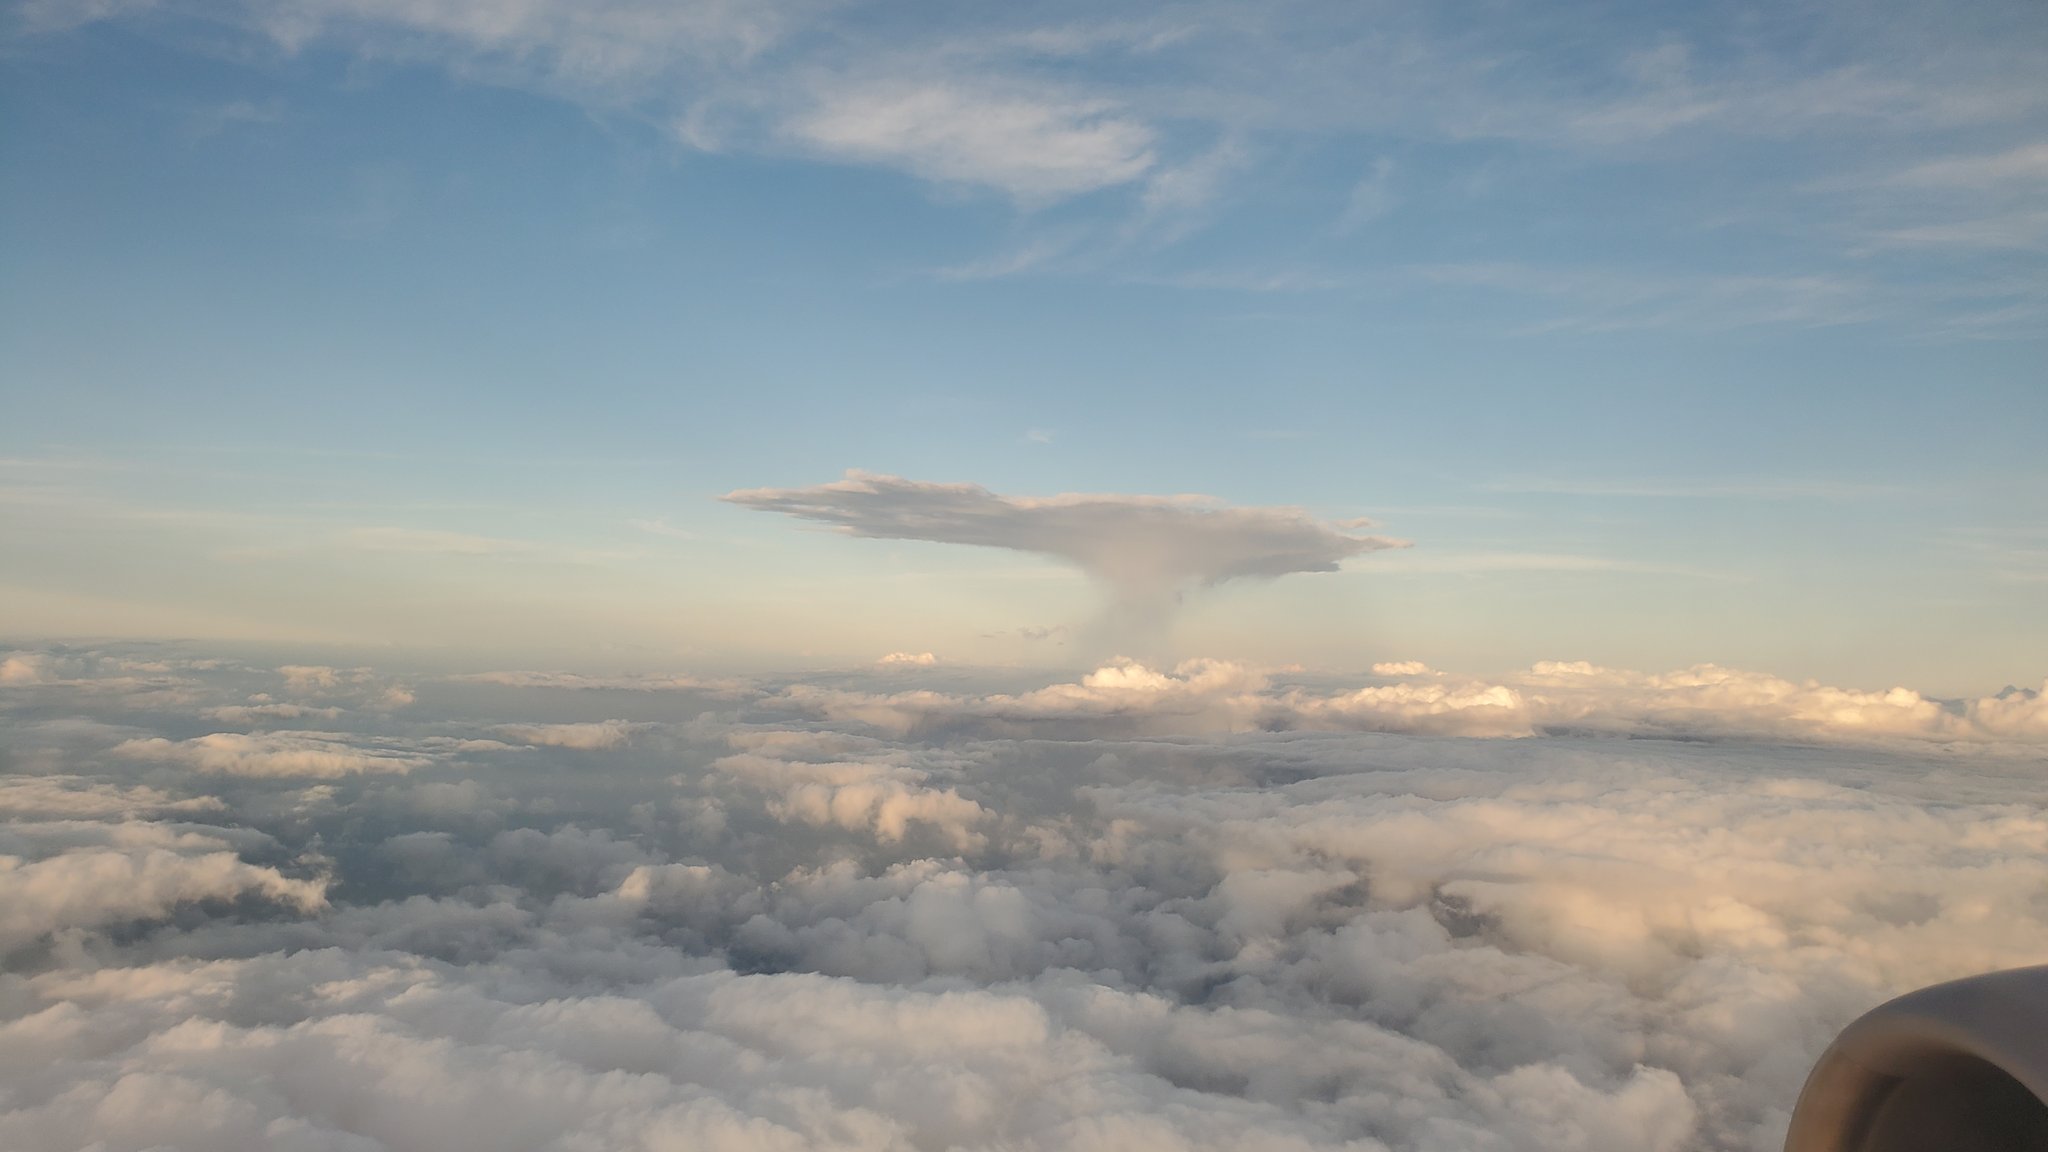 Umbrella cloud from Fukutoku-Okanoba volcano as seen from plane (image: @yoshikin2289/twitter)